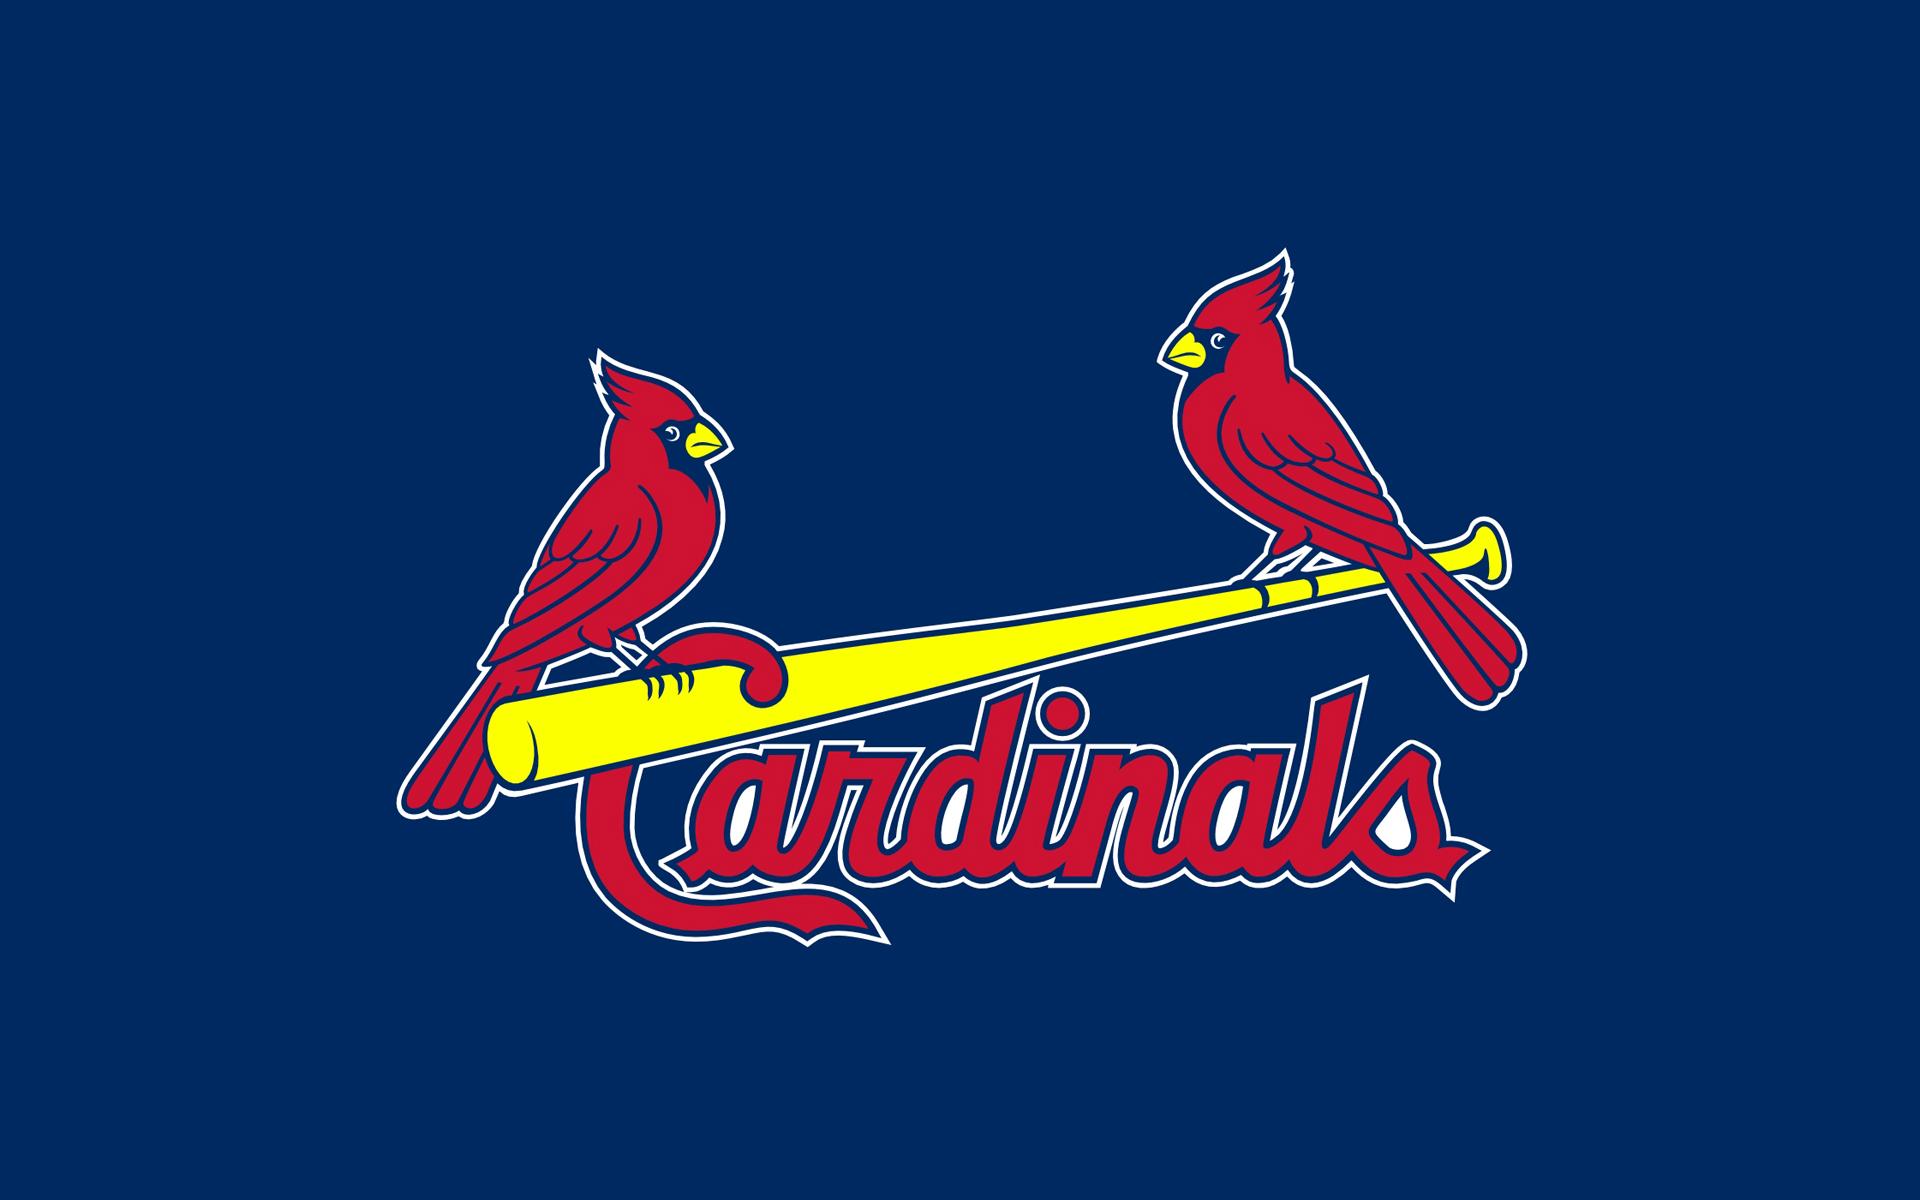 Arizona Cardinals Backgrounds Pixelstalk
cardinals - St. Louis Cardinals - HD Wallpaper 